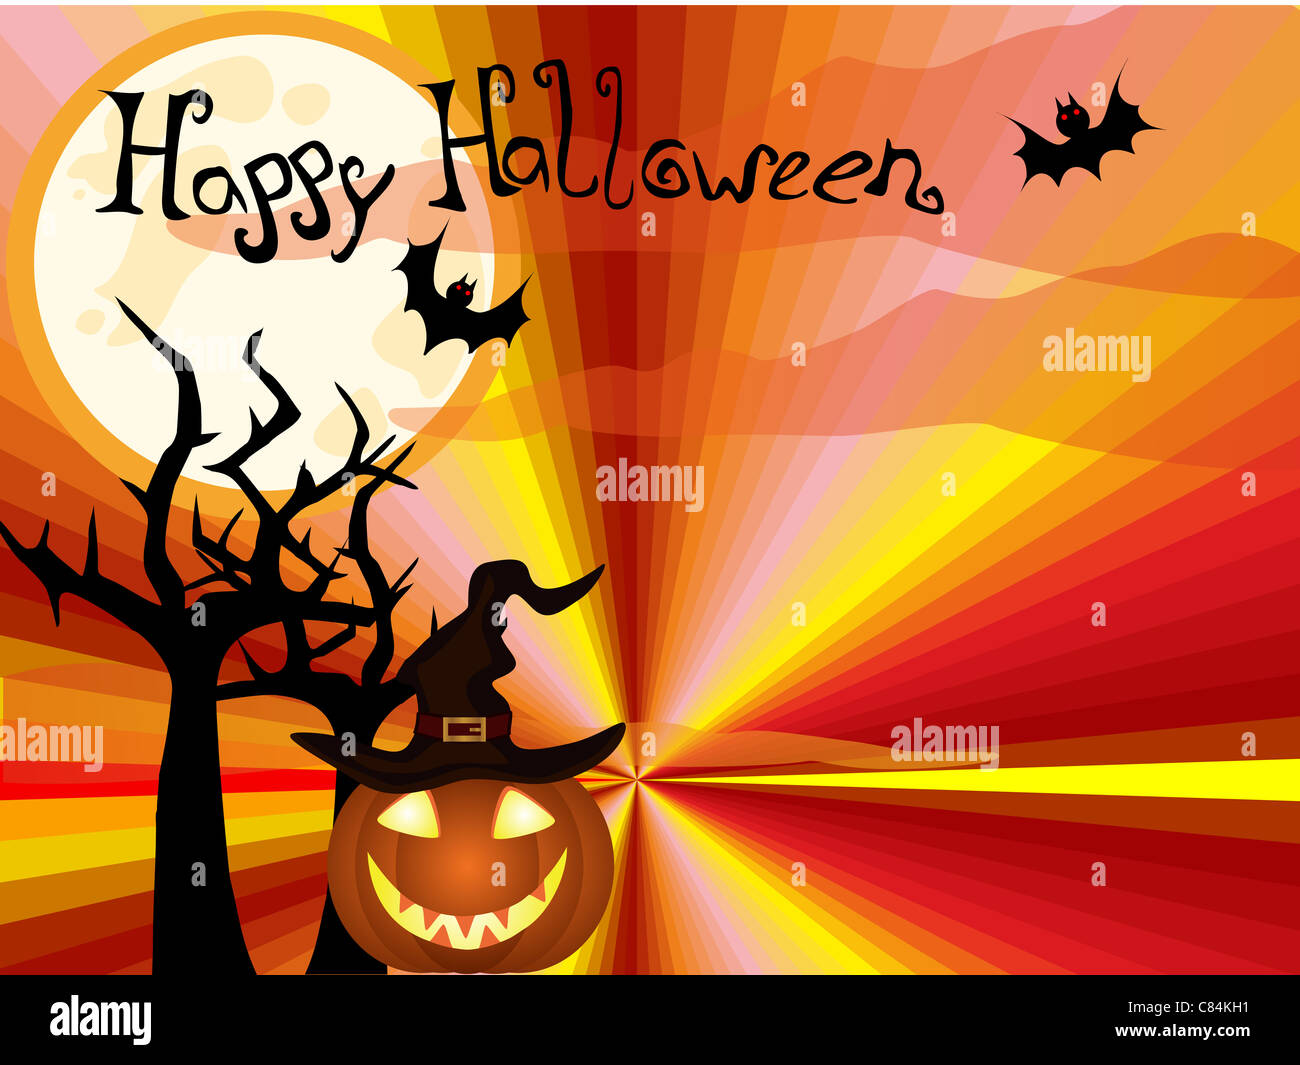 Halloween poster Stock Photo